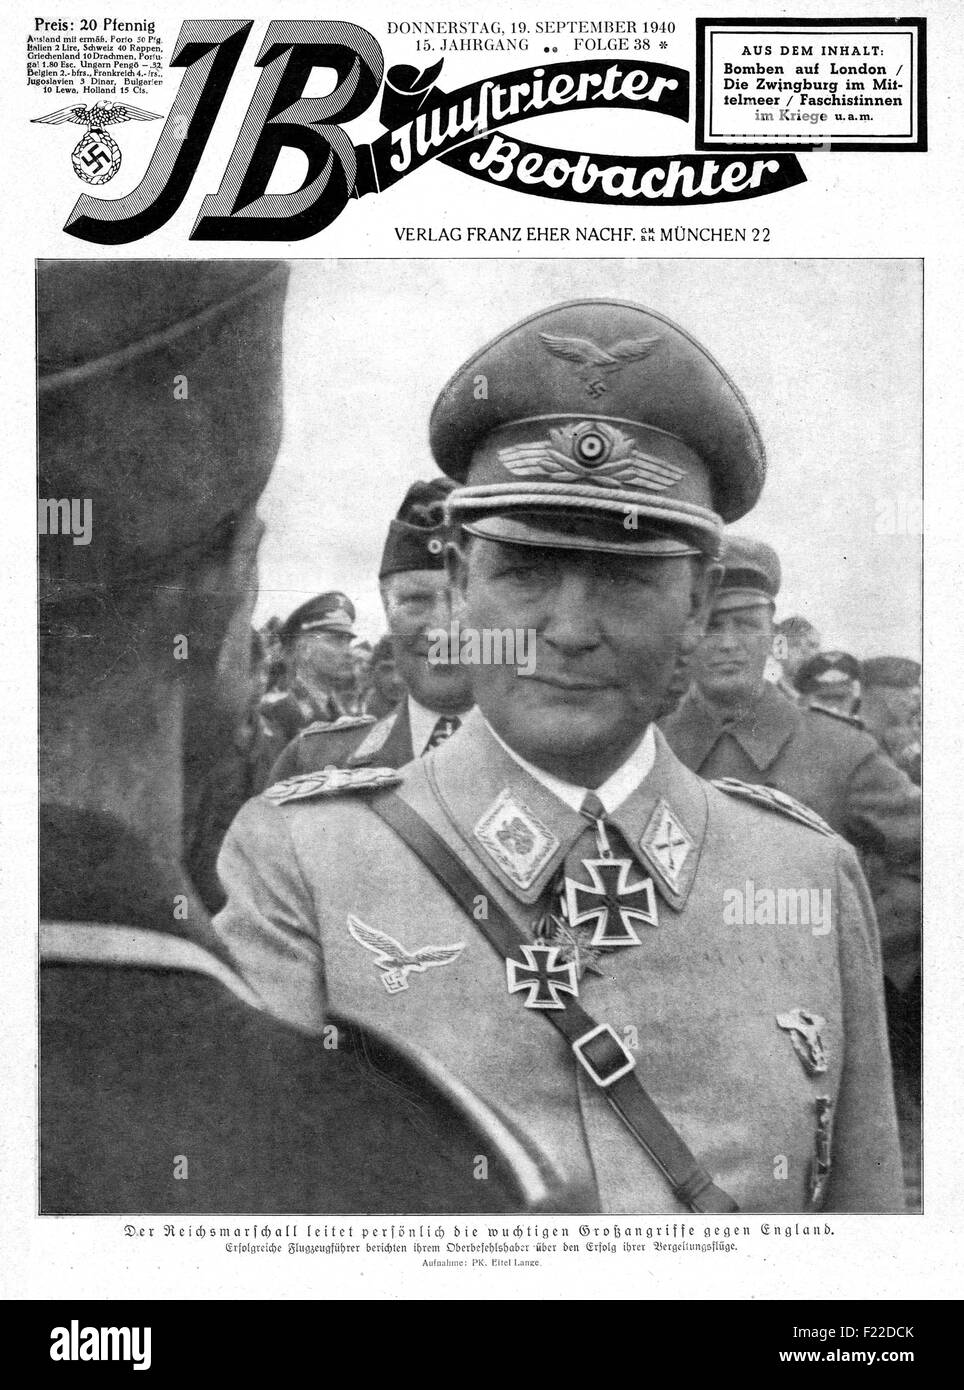 1940 Illustrierte Beobachter front page showing Reichsmarschall Herman Goering Stock Photo